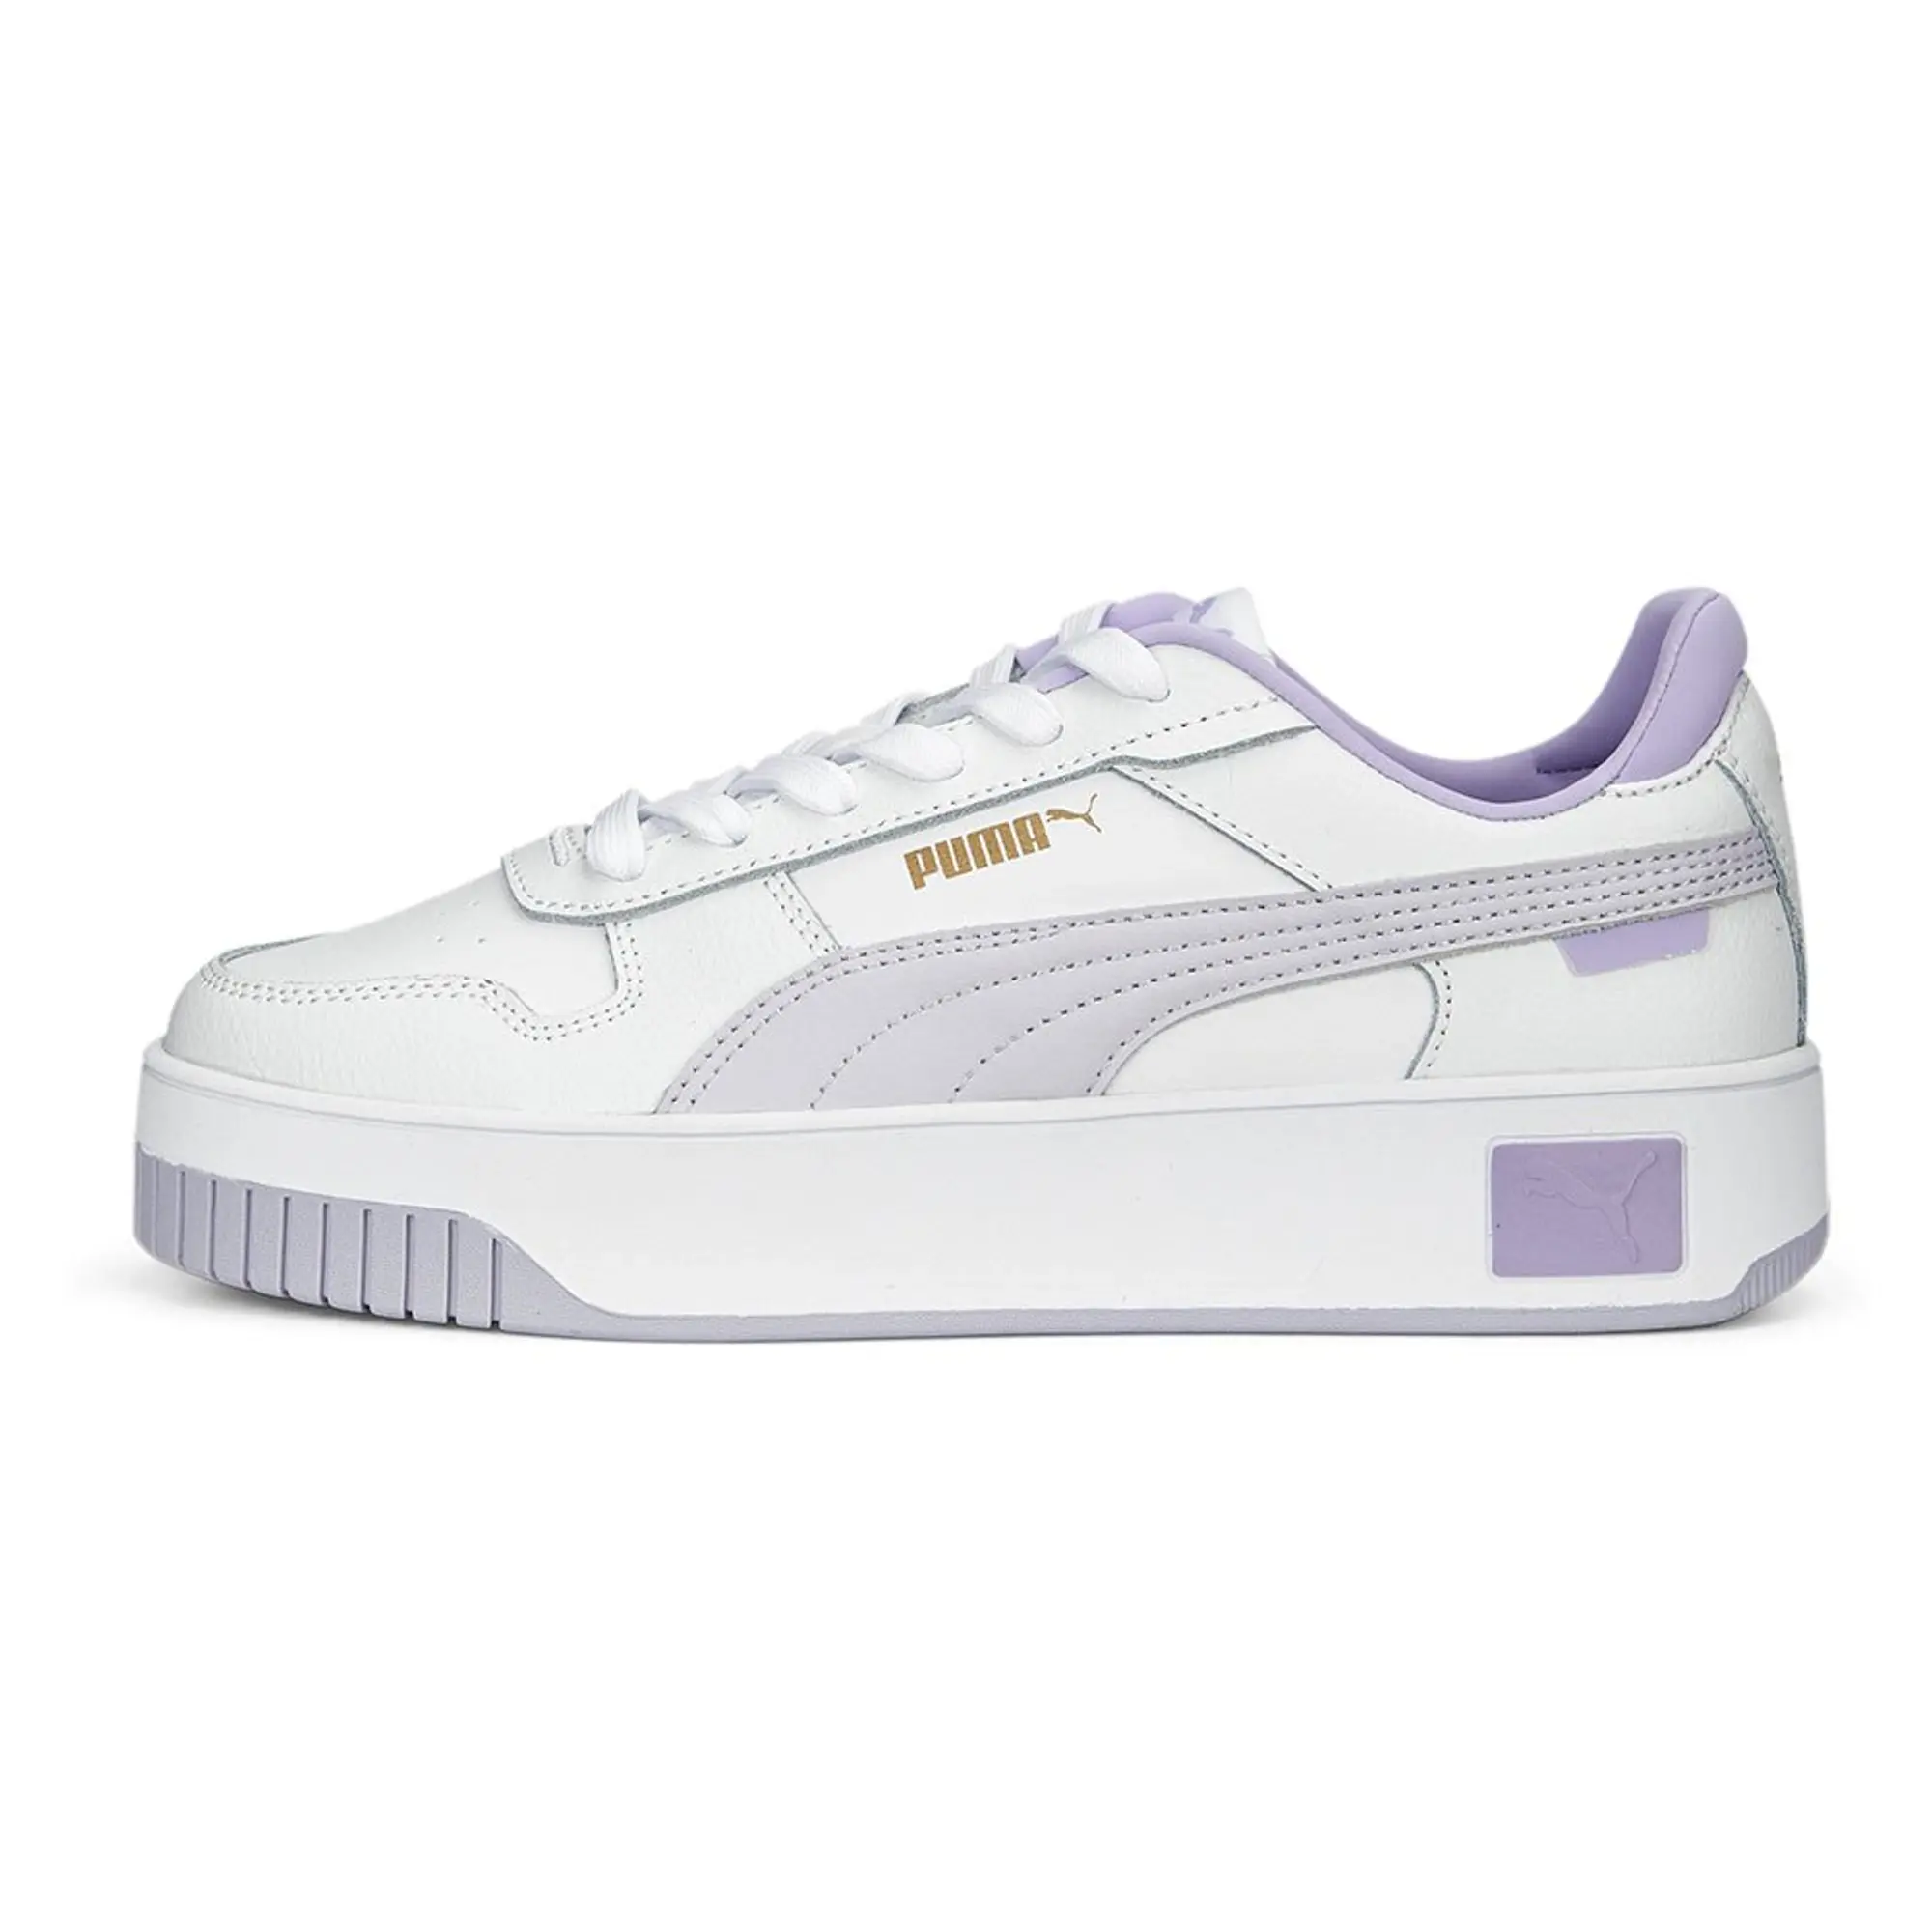 PUMA carina street trainers in white & purple